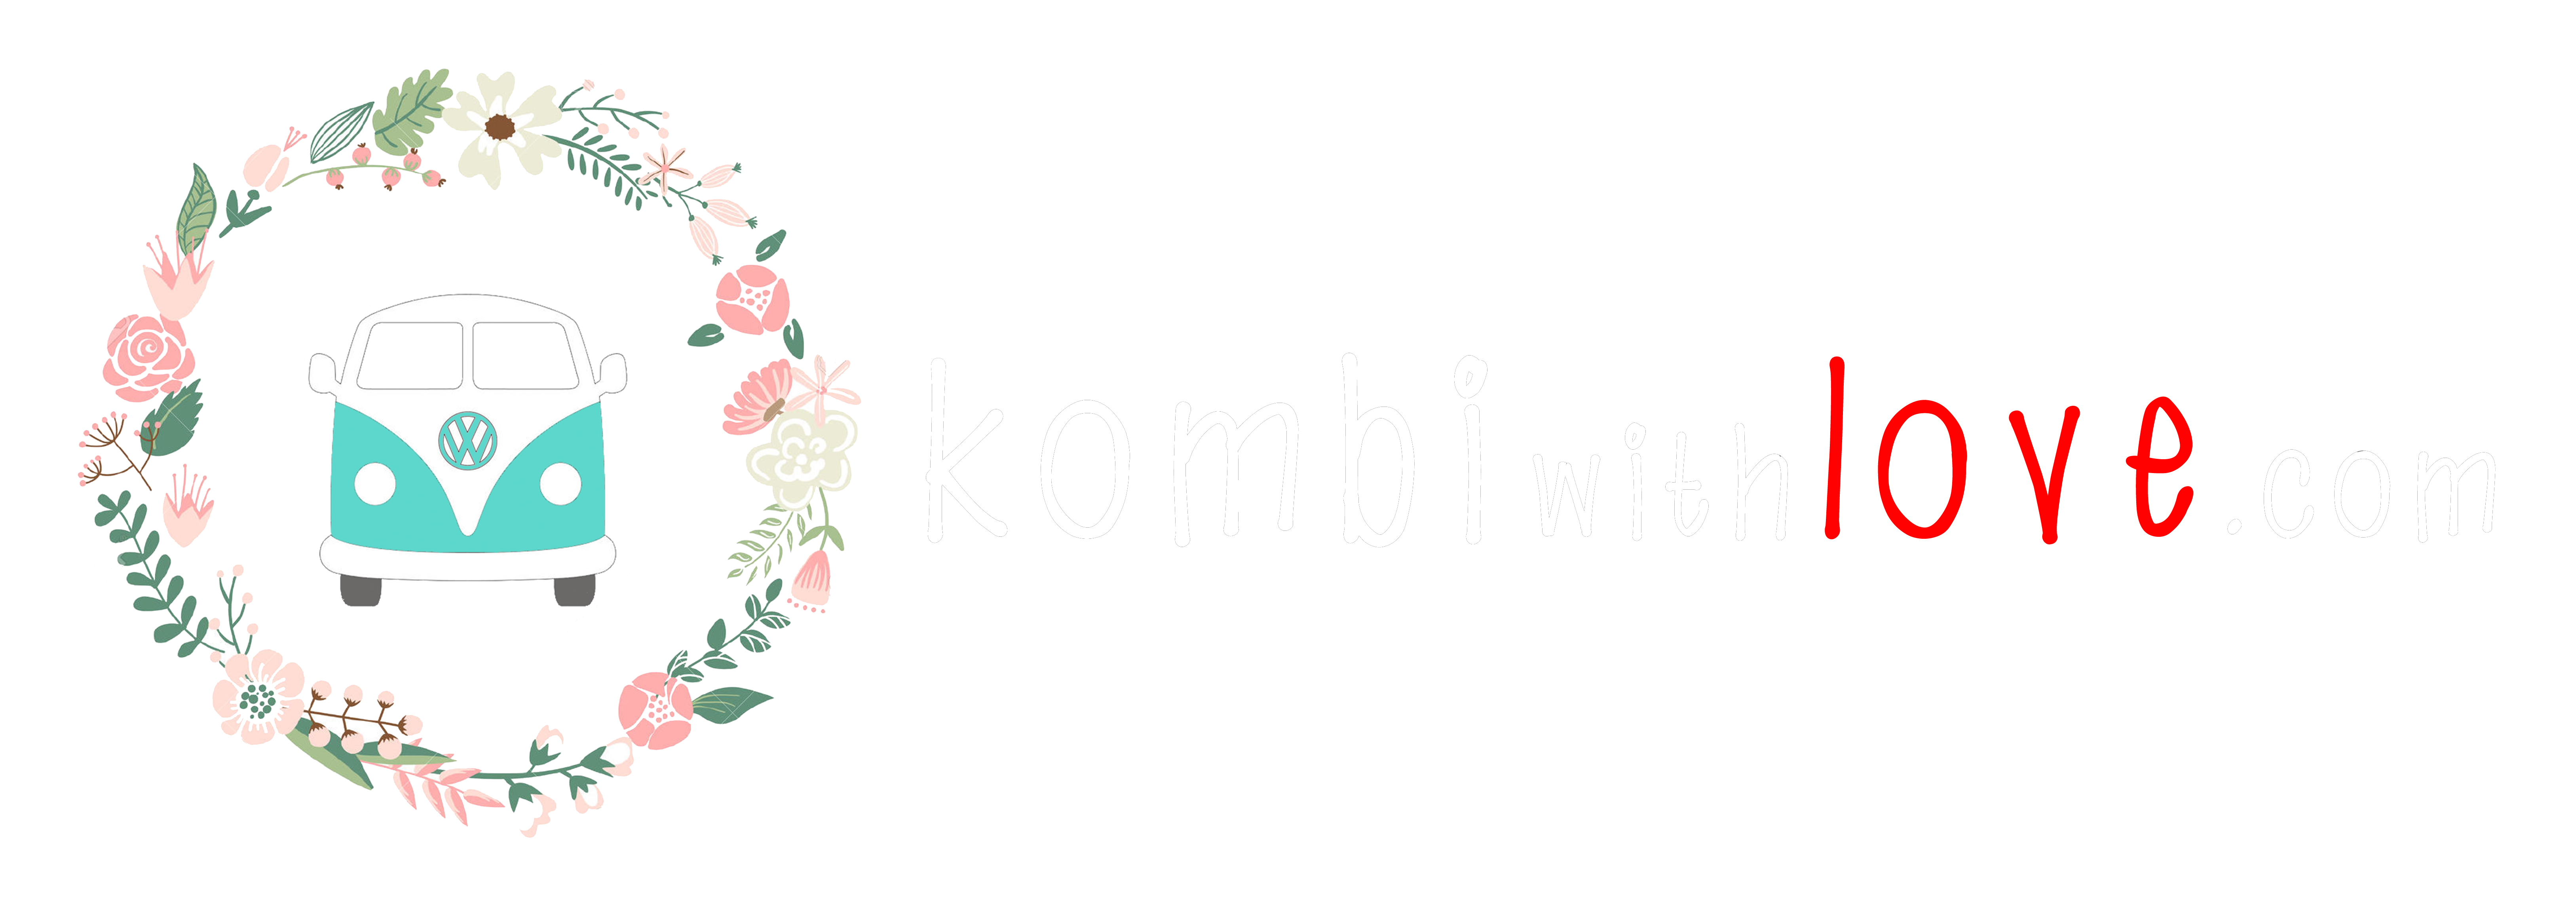 Kombi with Love